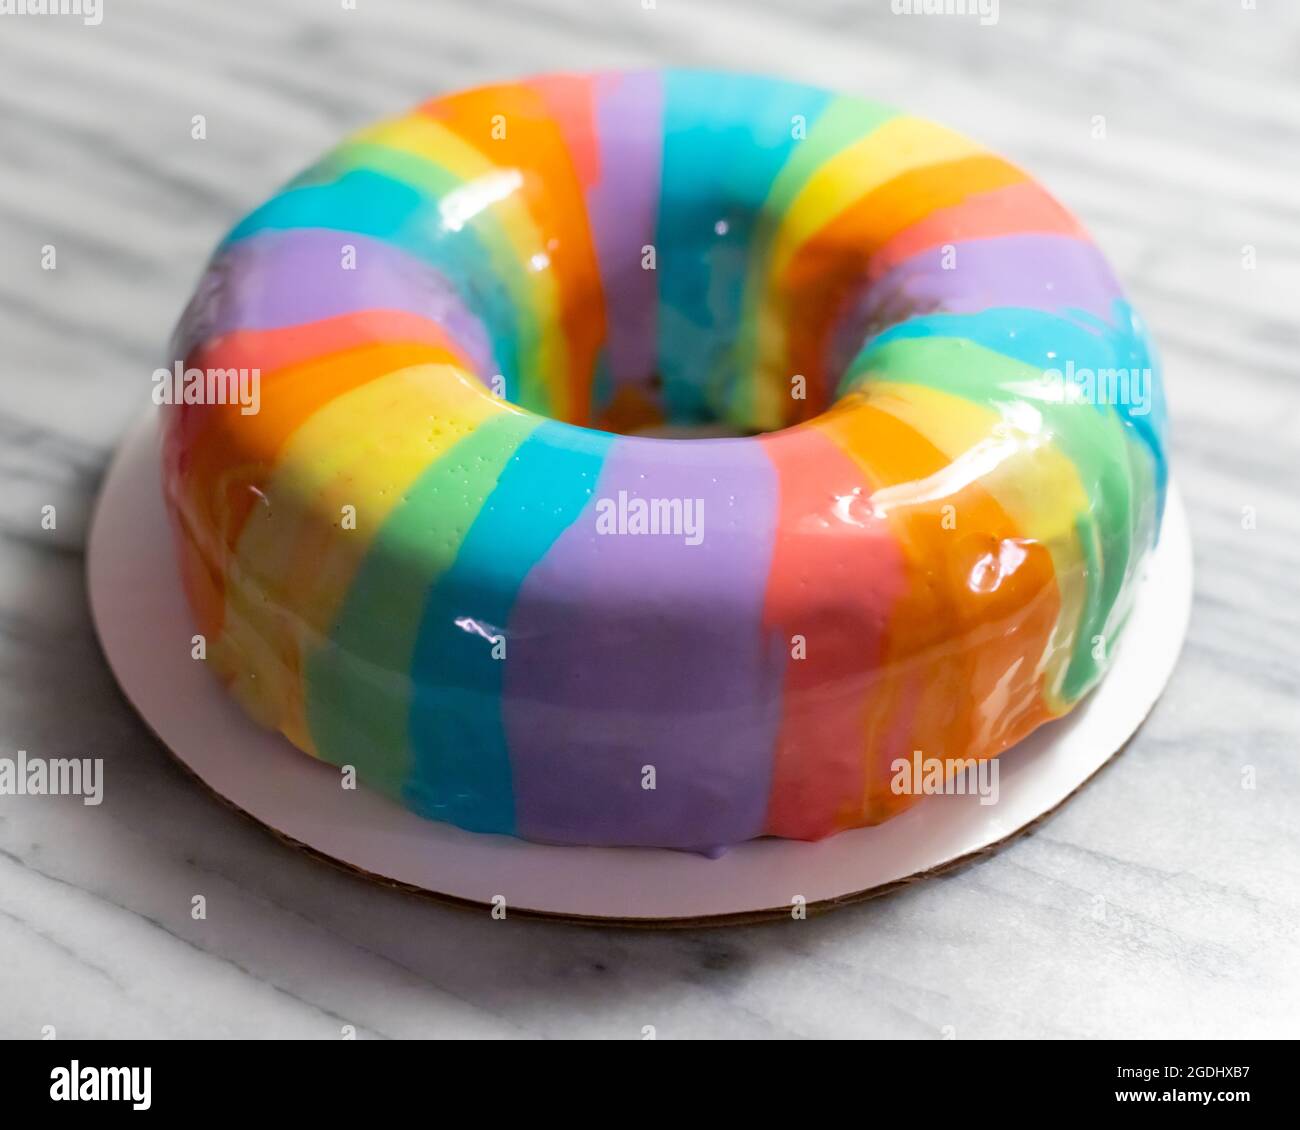 rainbow mirror glaze ring cake Stock Photo